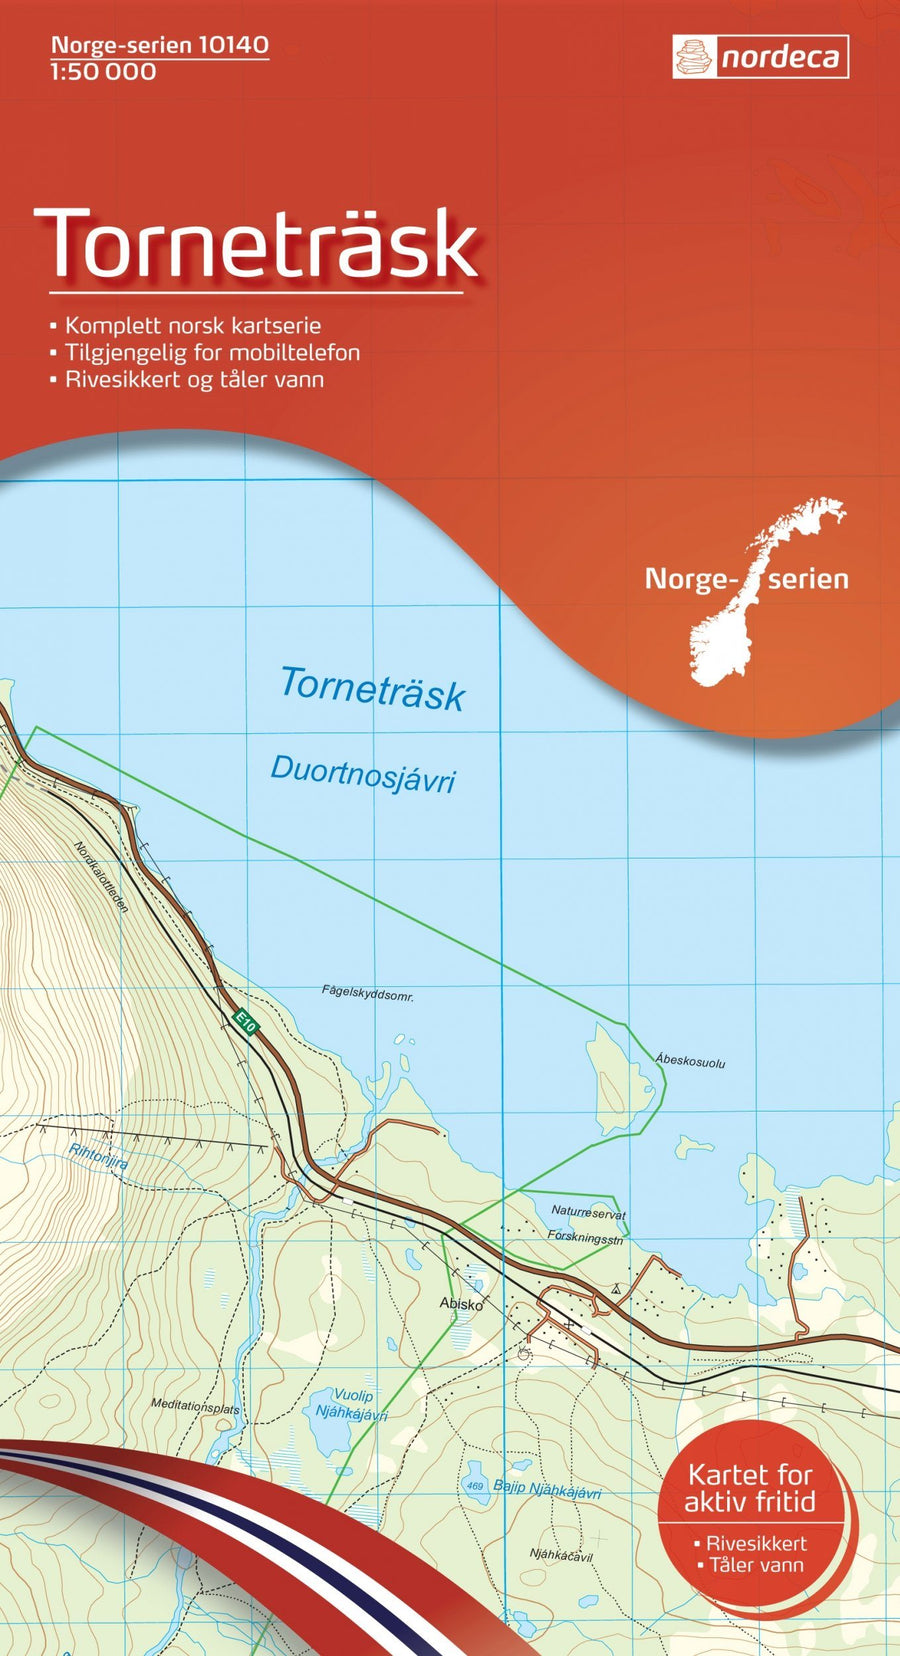 Carte de randonnée n° 10140 - Tornetrask (Norvège) | Nordeca - Norge-serien carte pliée Nordeca 